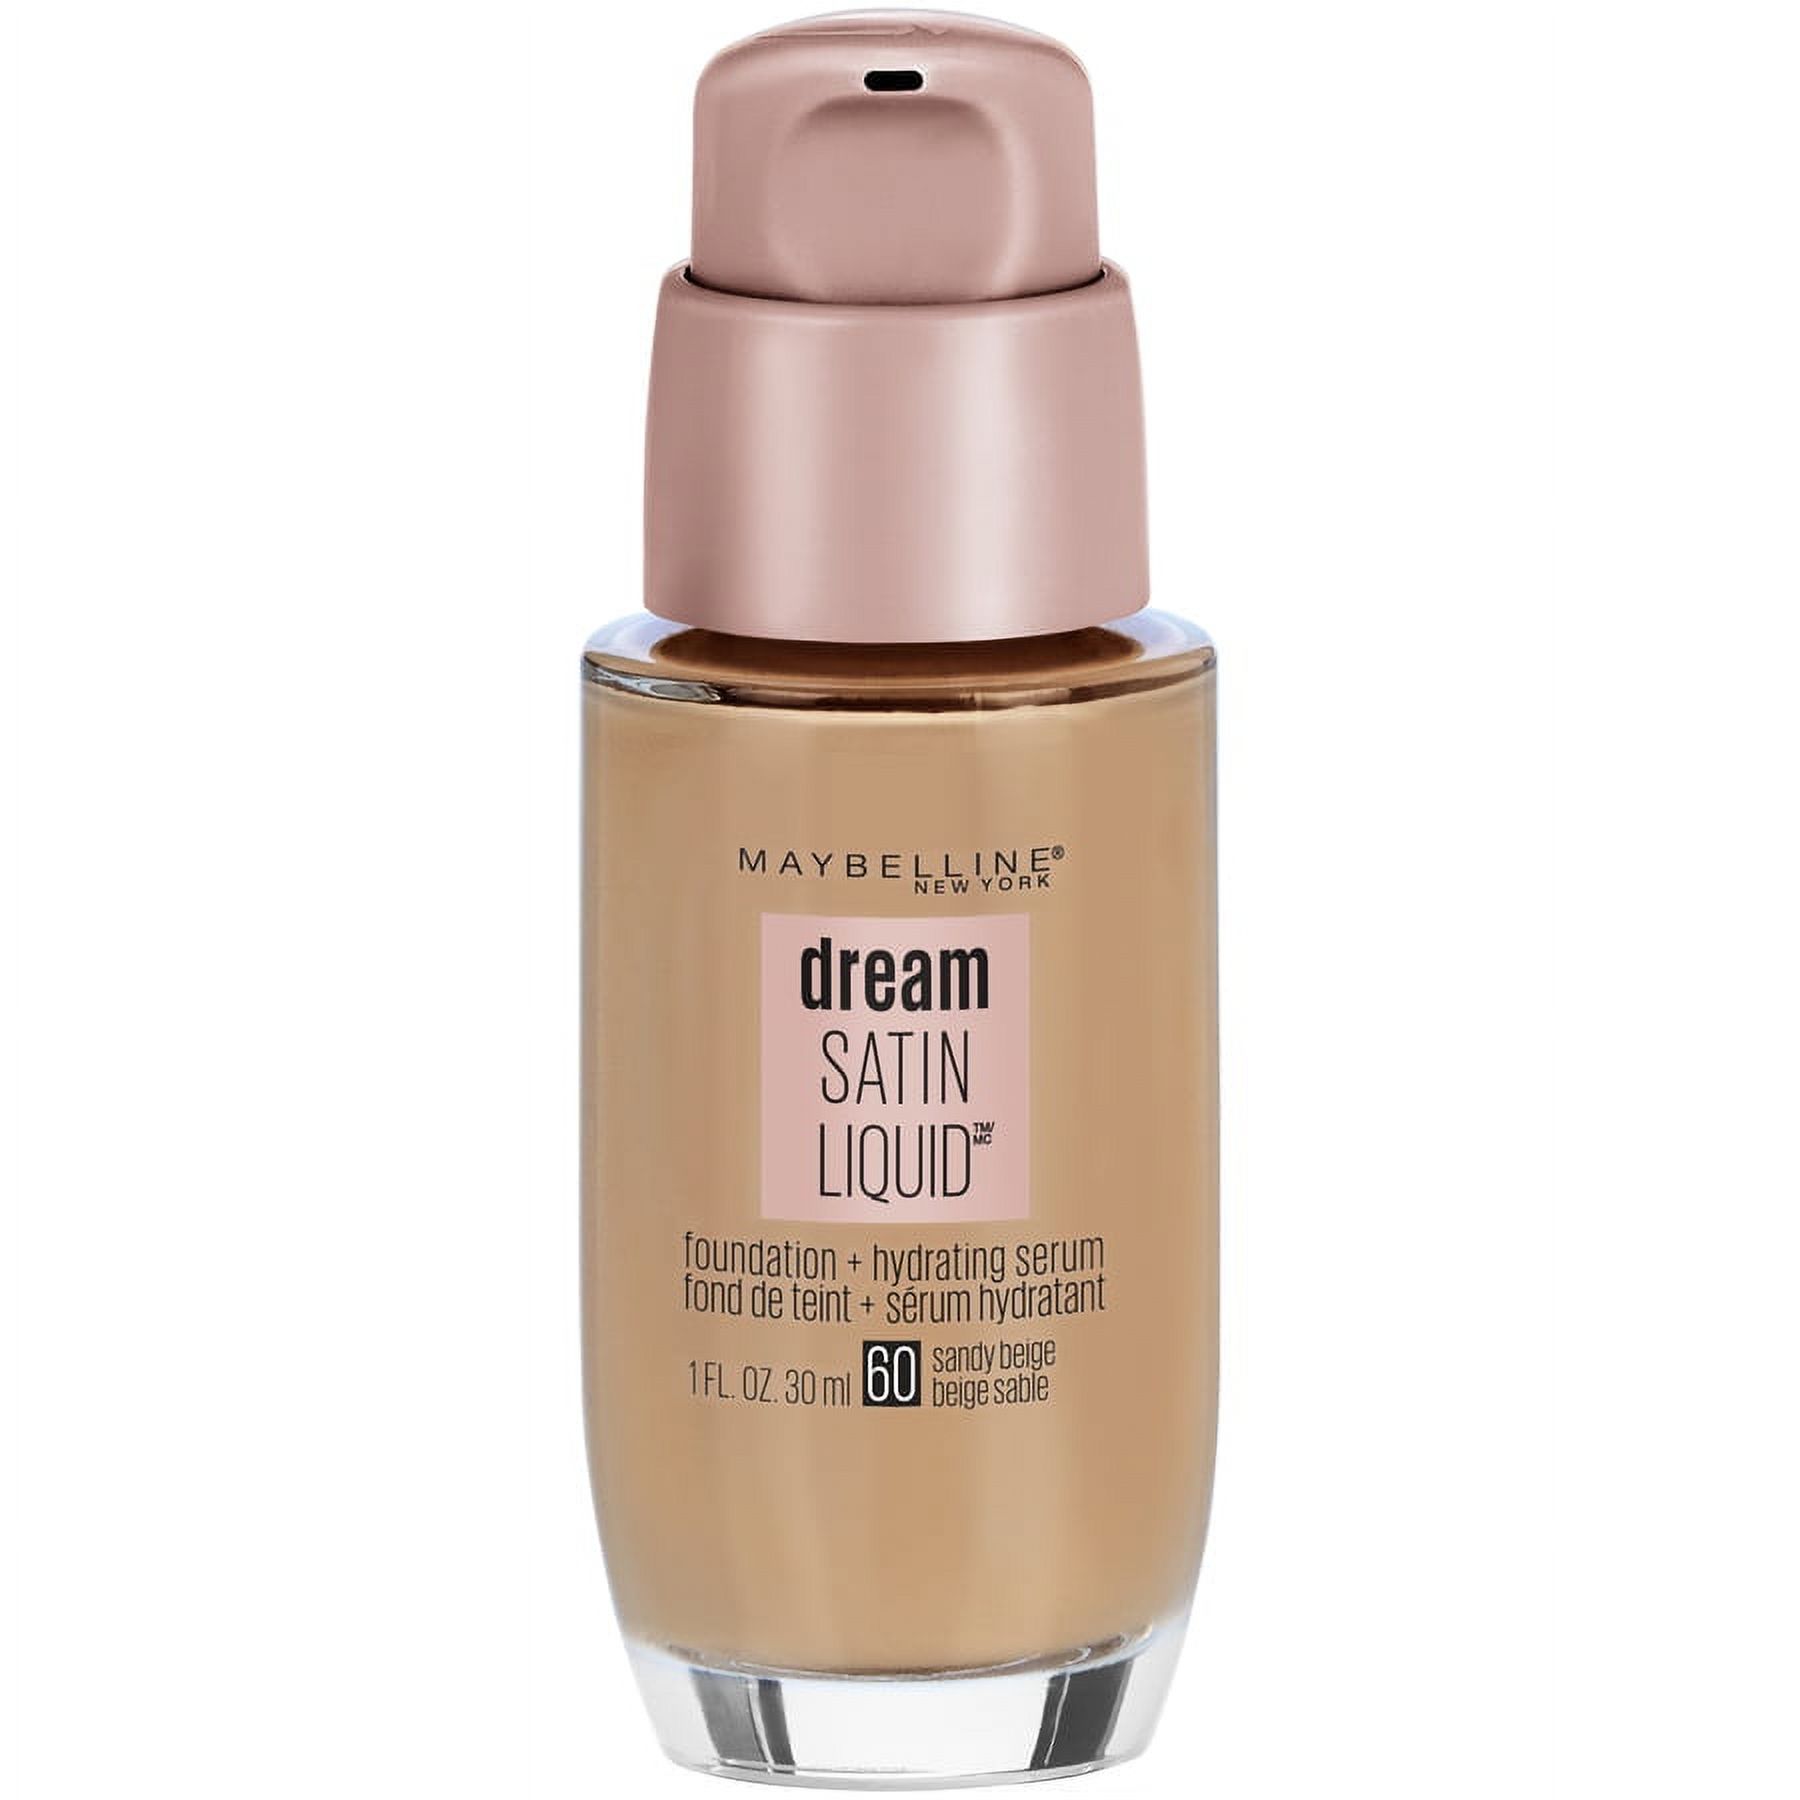 Maybelline Dream Satin Liquid Foundation Makeup for All Skin, Sandy Beige, 1 fl oz - image 1 of 6